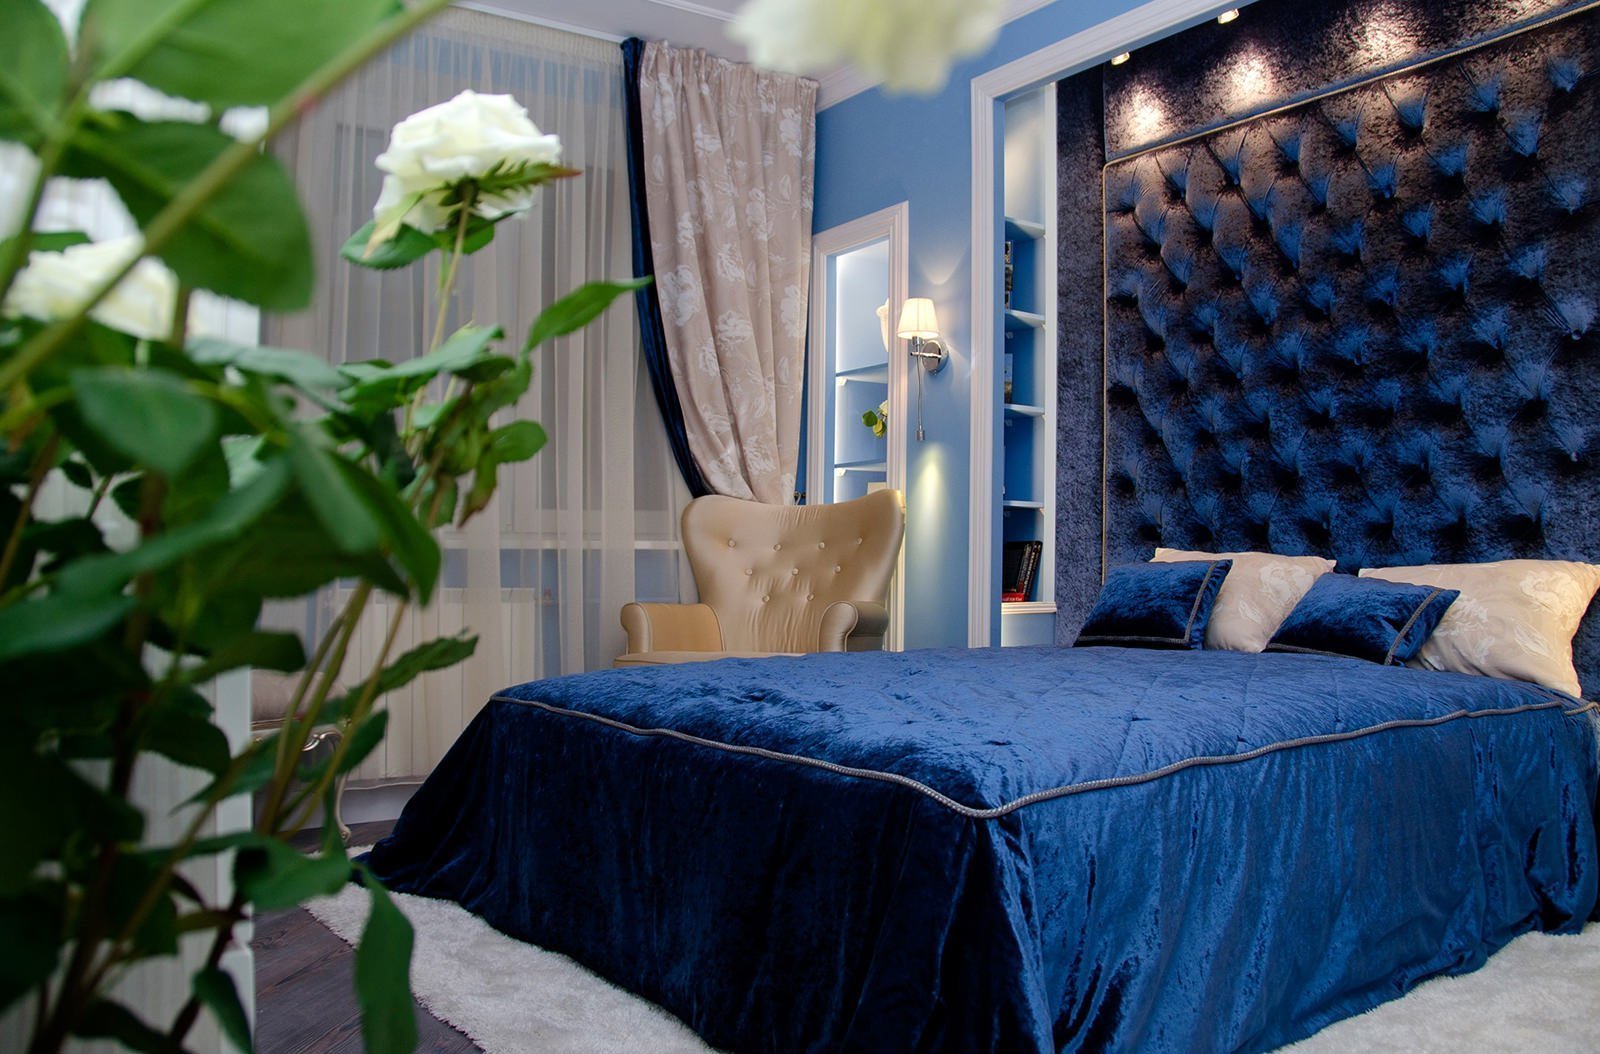 sovrum i blått designfoto